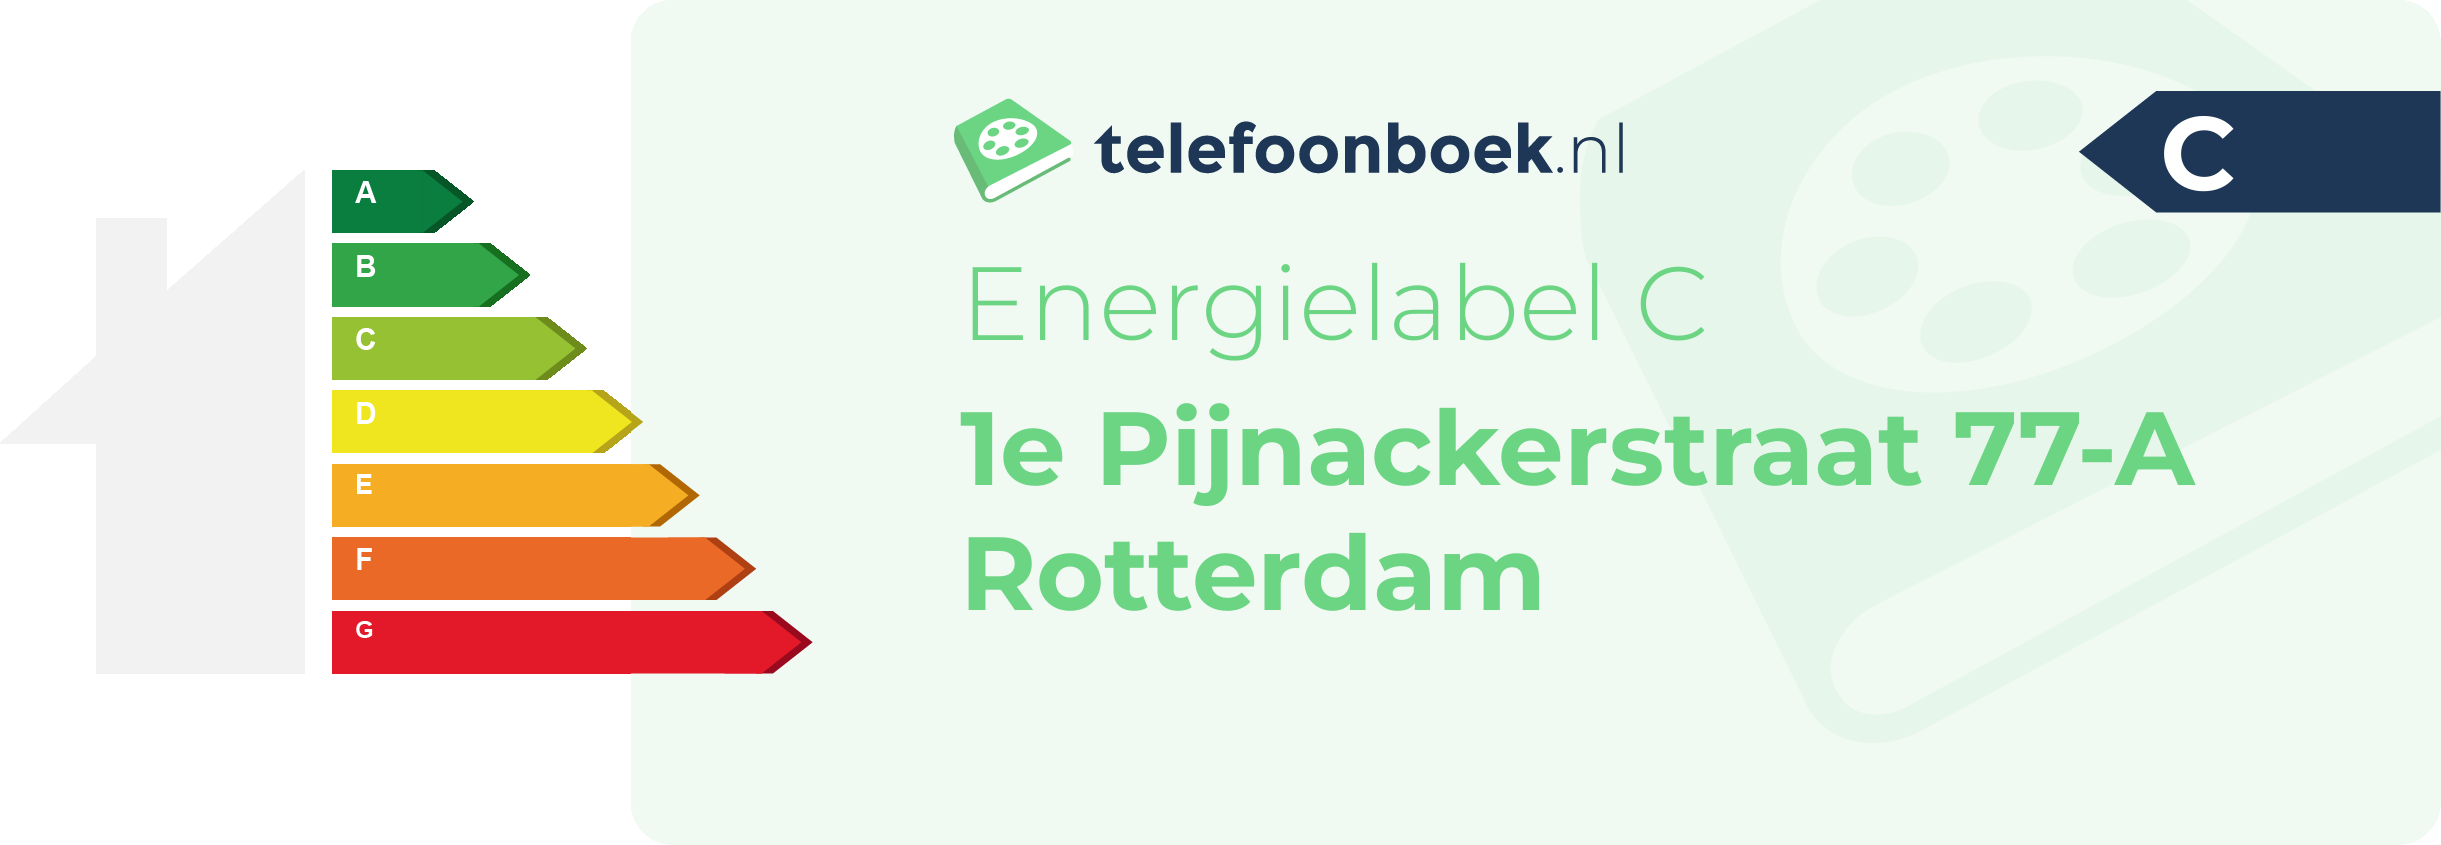 Energielabel 1e Pijnackerstraat 77-A Rotterdam